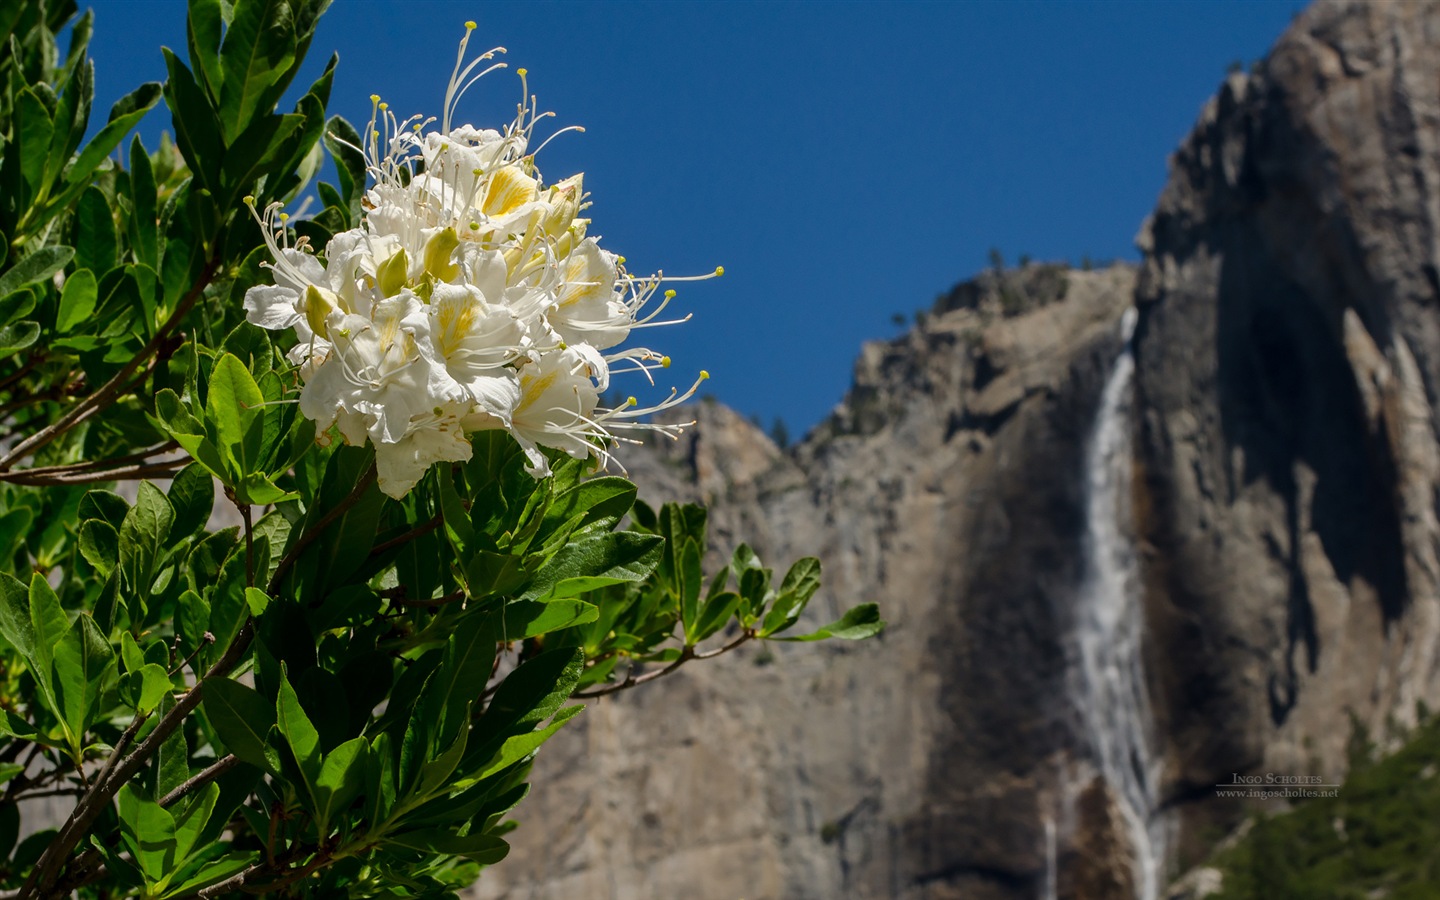 Windows 8 Thema, Yosemite National Park HD Wallpaper #4 - 1440x900